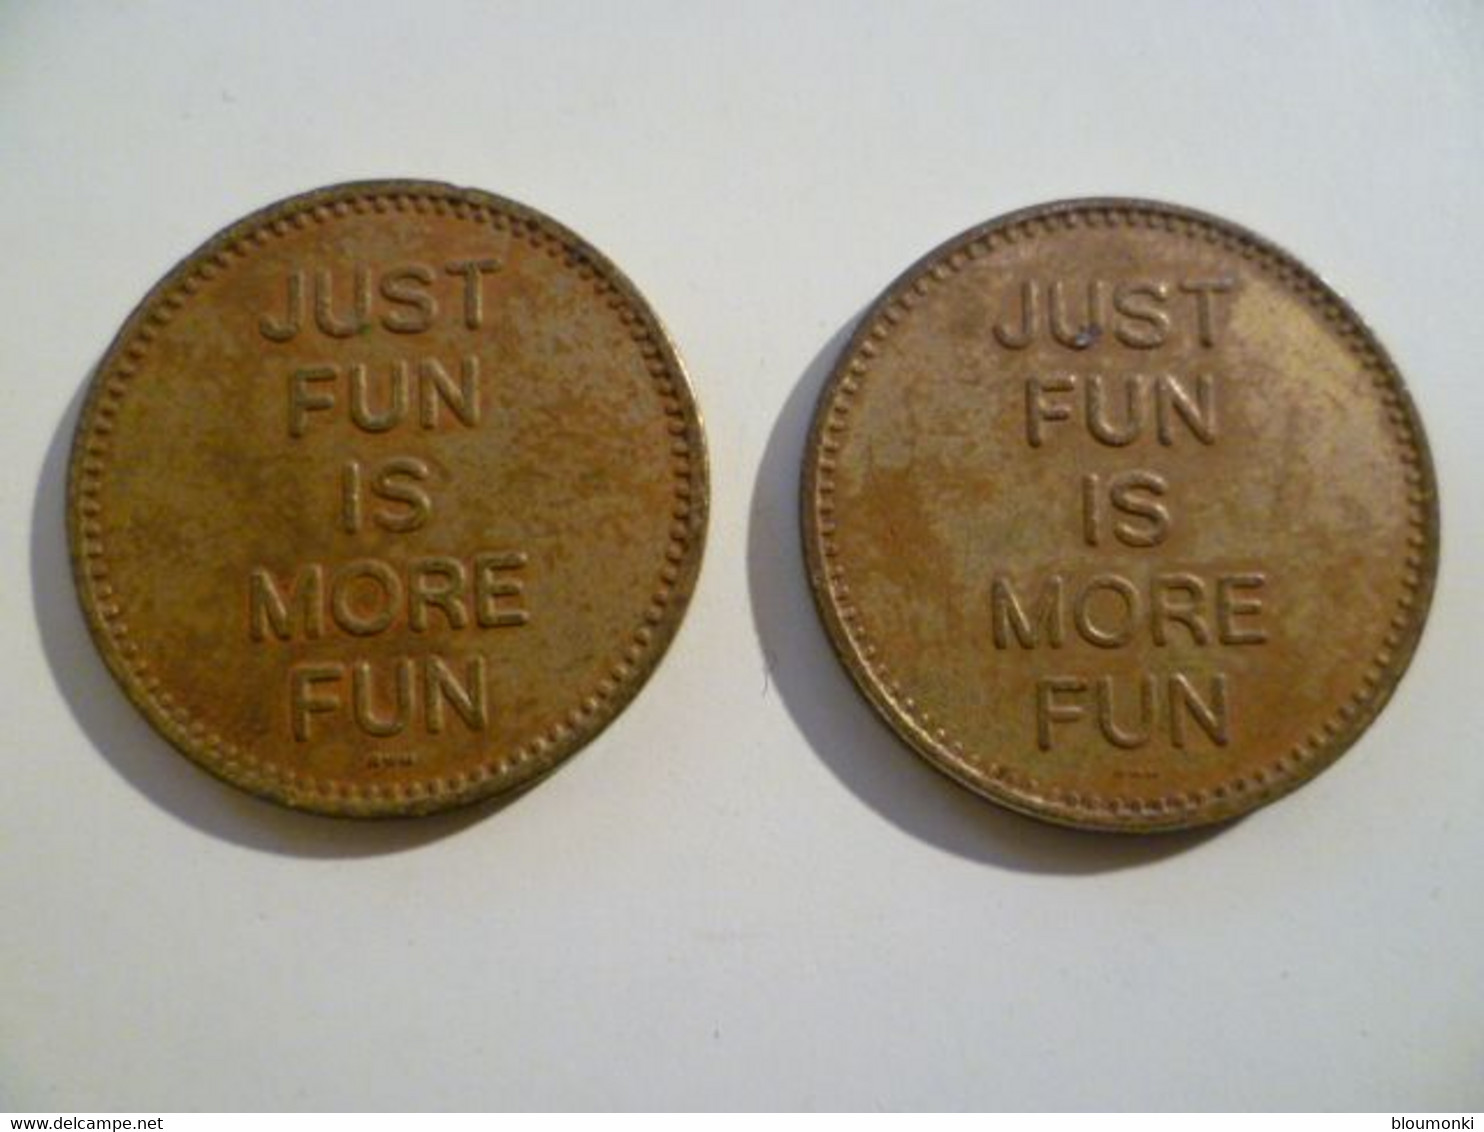 2 Jetons Etats Unis / USA Coins / ACRA No Cash Value Just Fun Is More Fun - Professionals/Firms